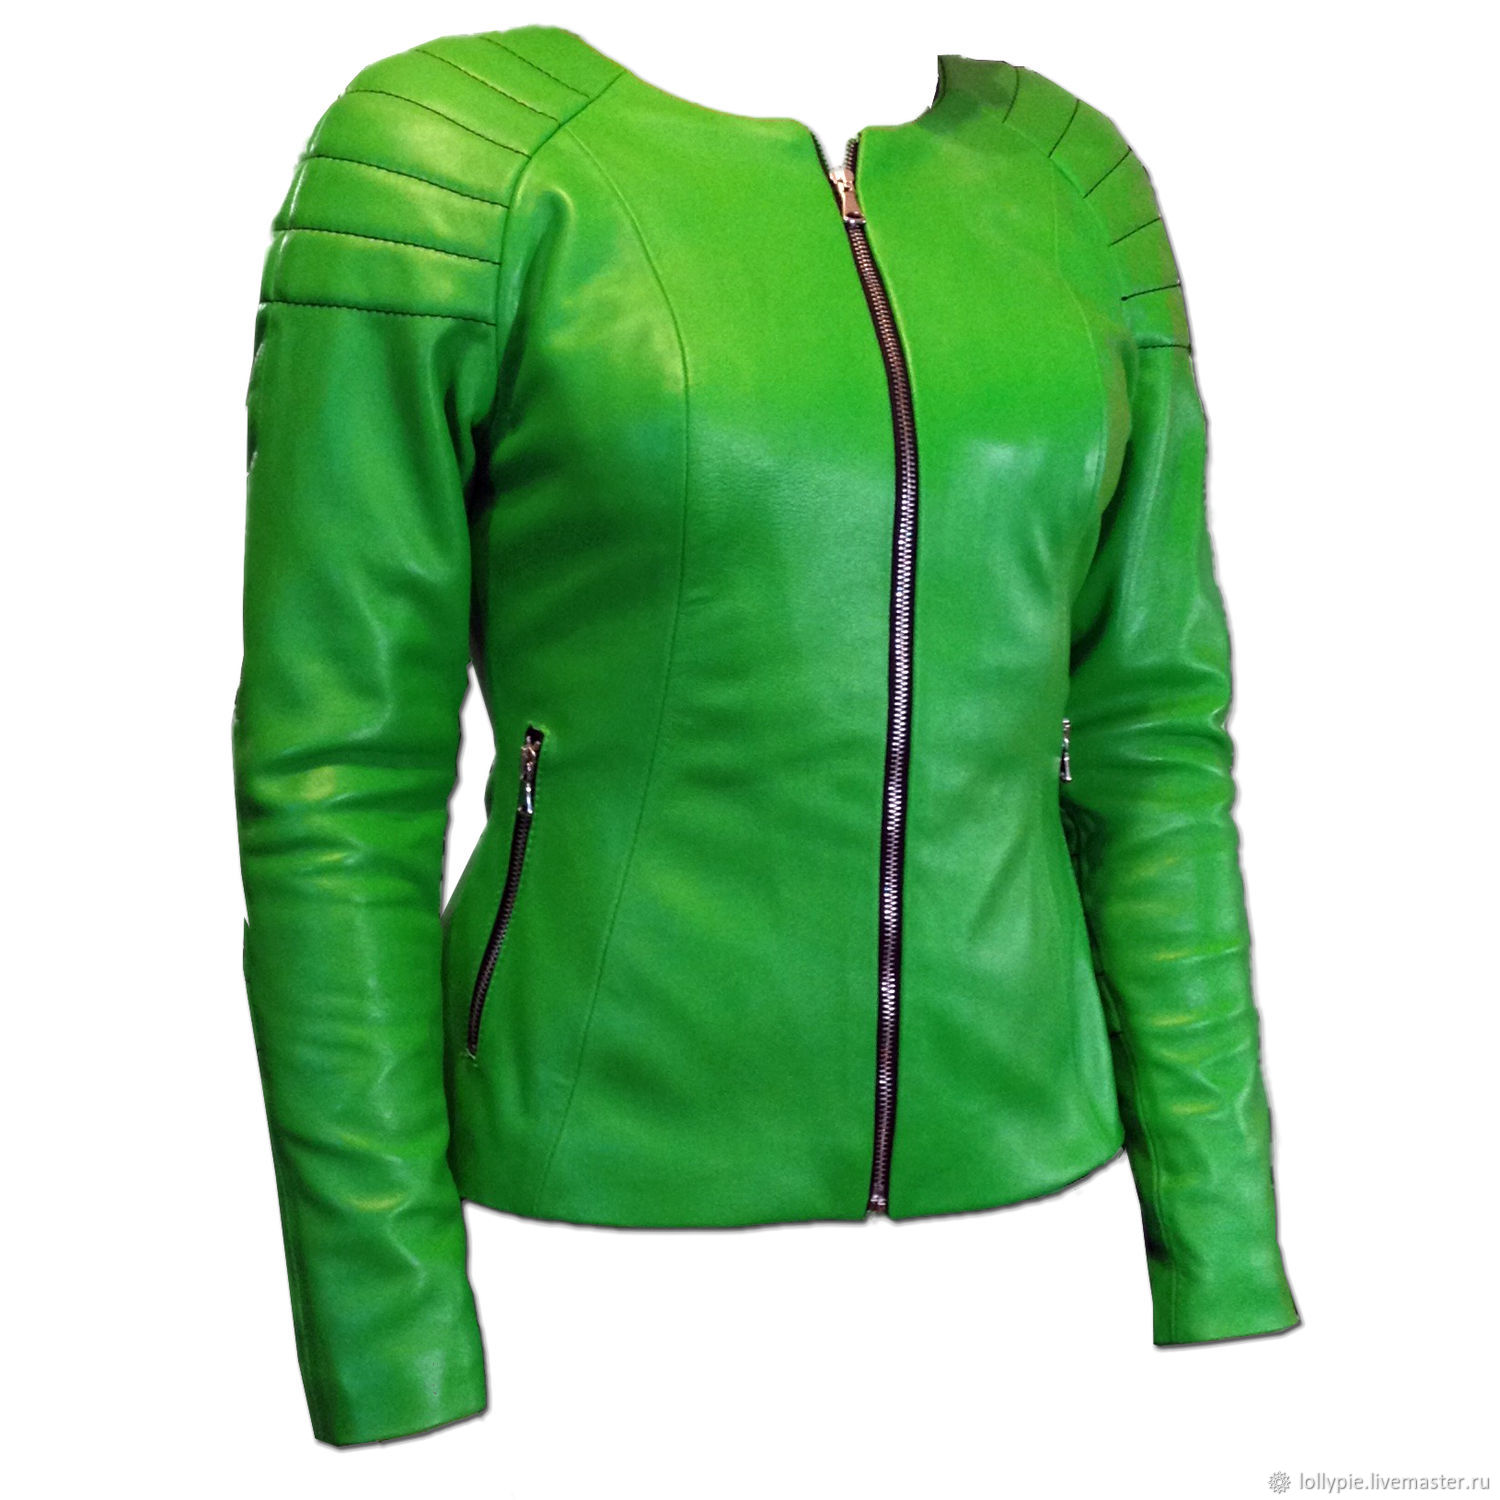 Ярко зеленая куртка